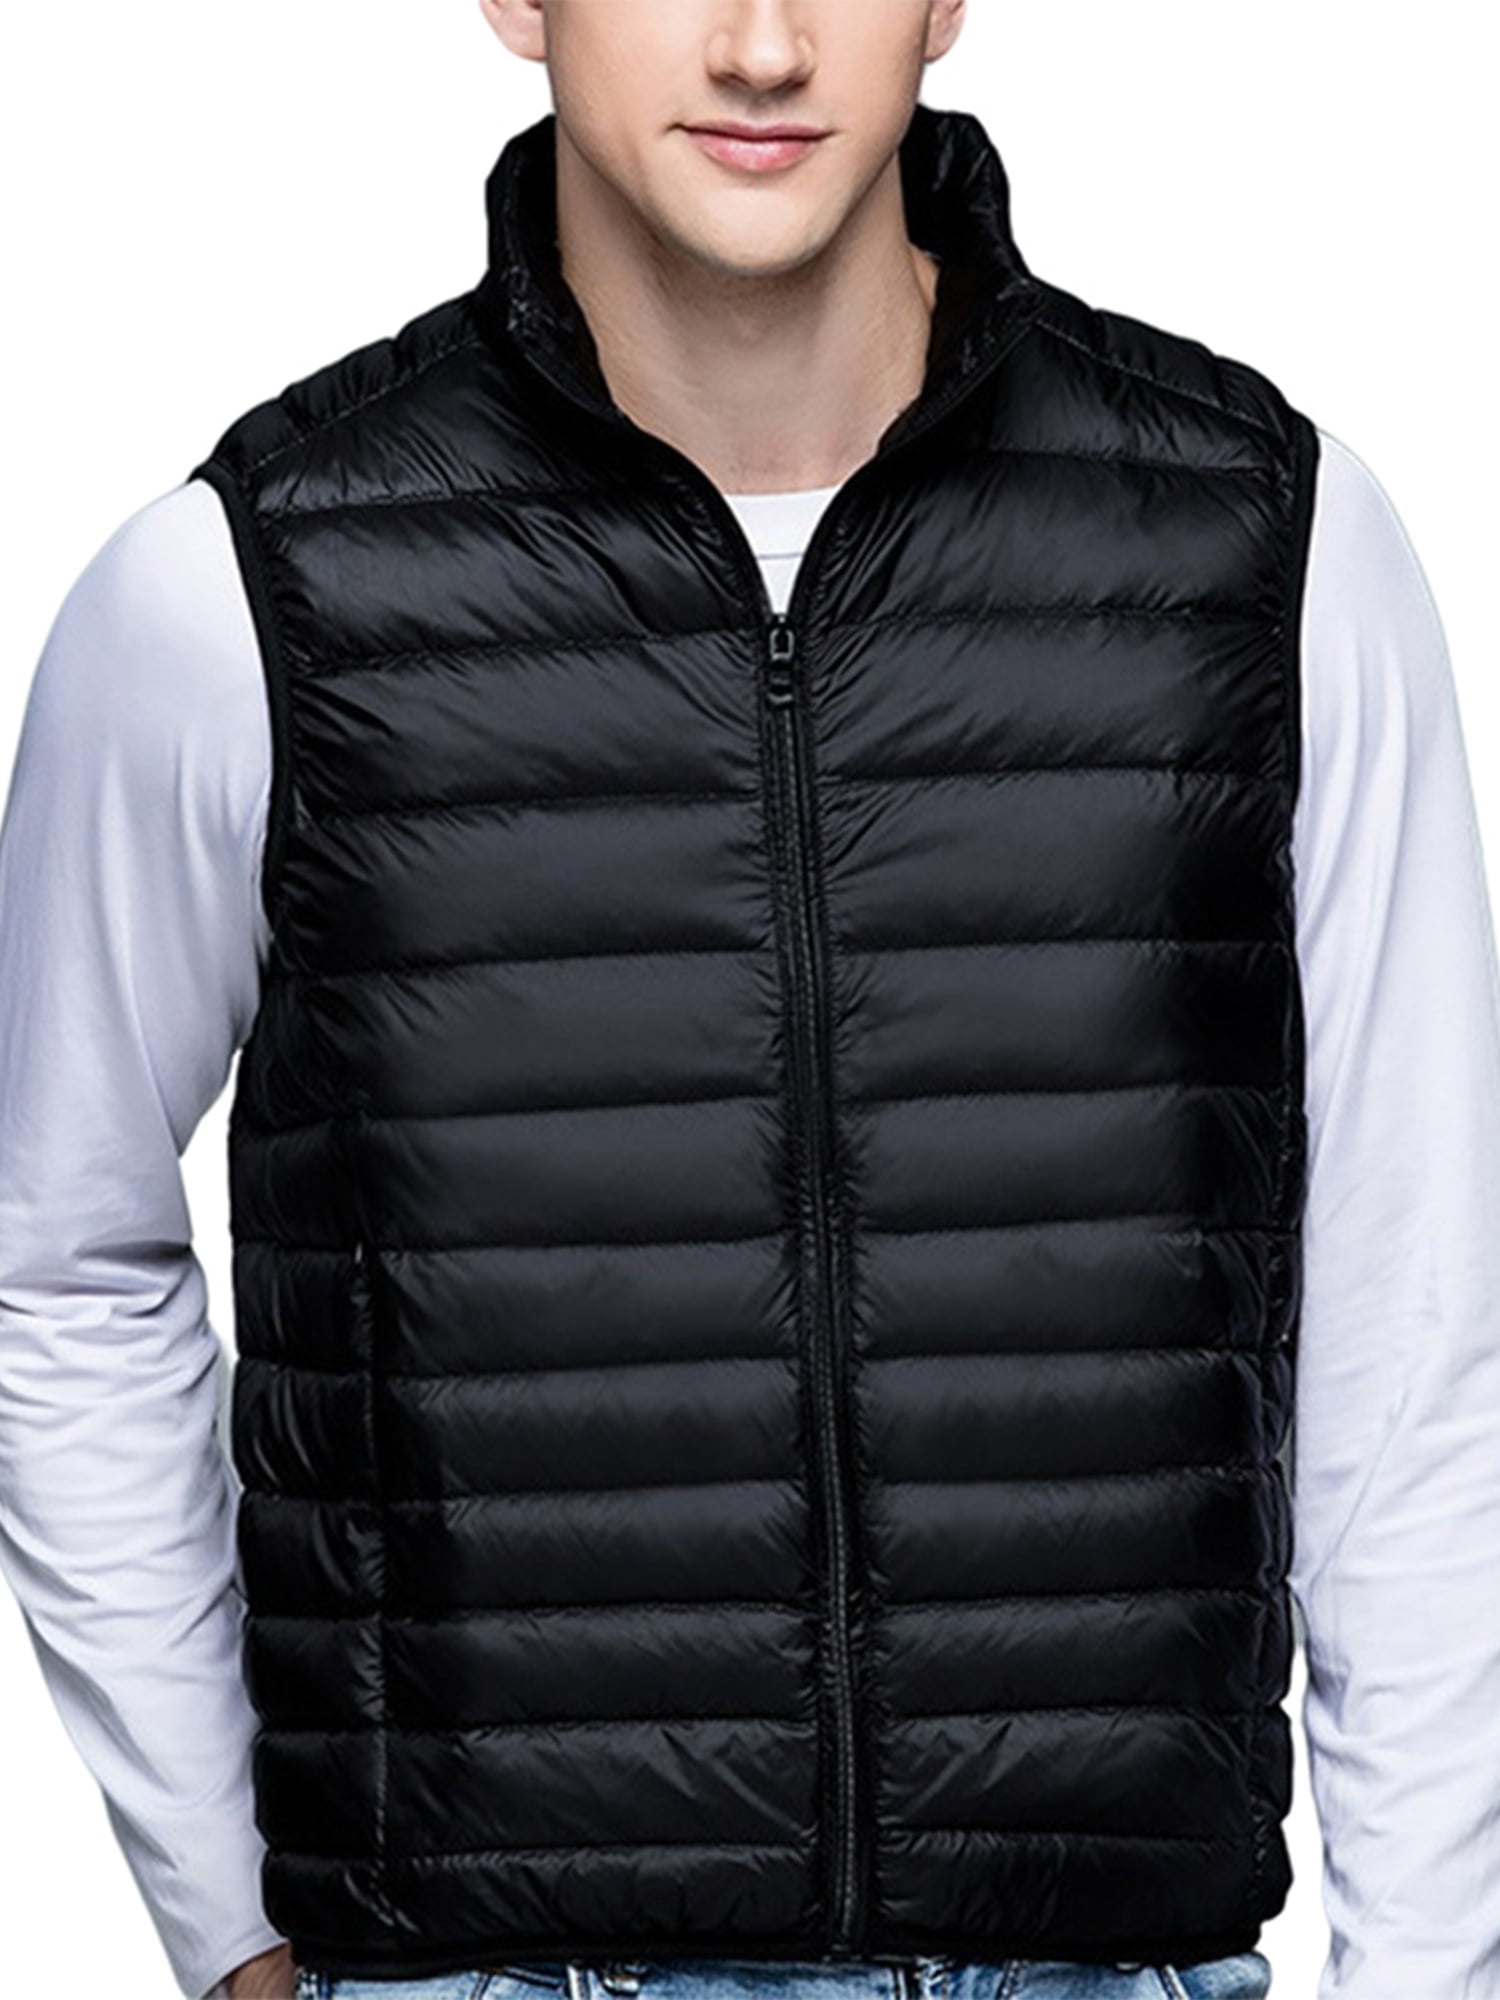 Men Outdoor Casual Winter Warm Hooded Zipper Sleeveless Vest Solid Down Jacket Coat Outerwear Tops 